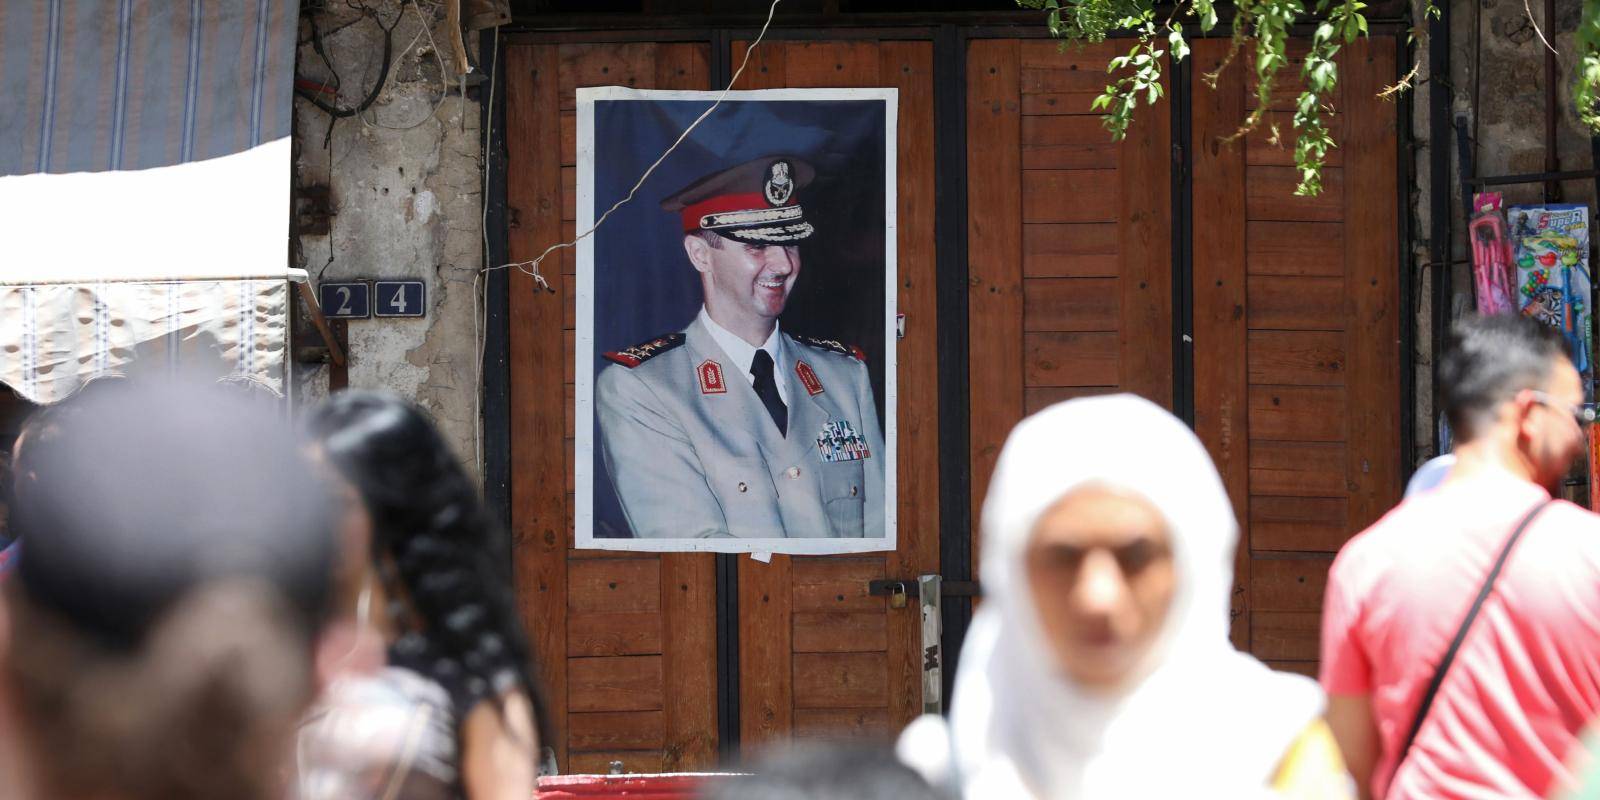 Syrian citizens walk past a door that has an Assad poster on it